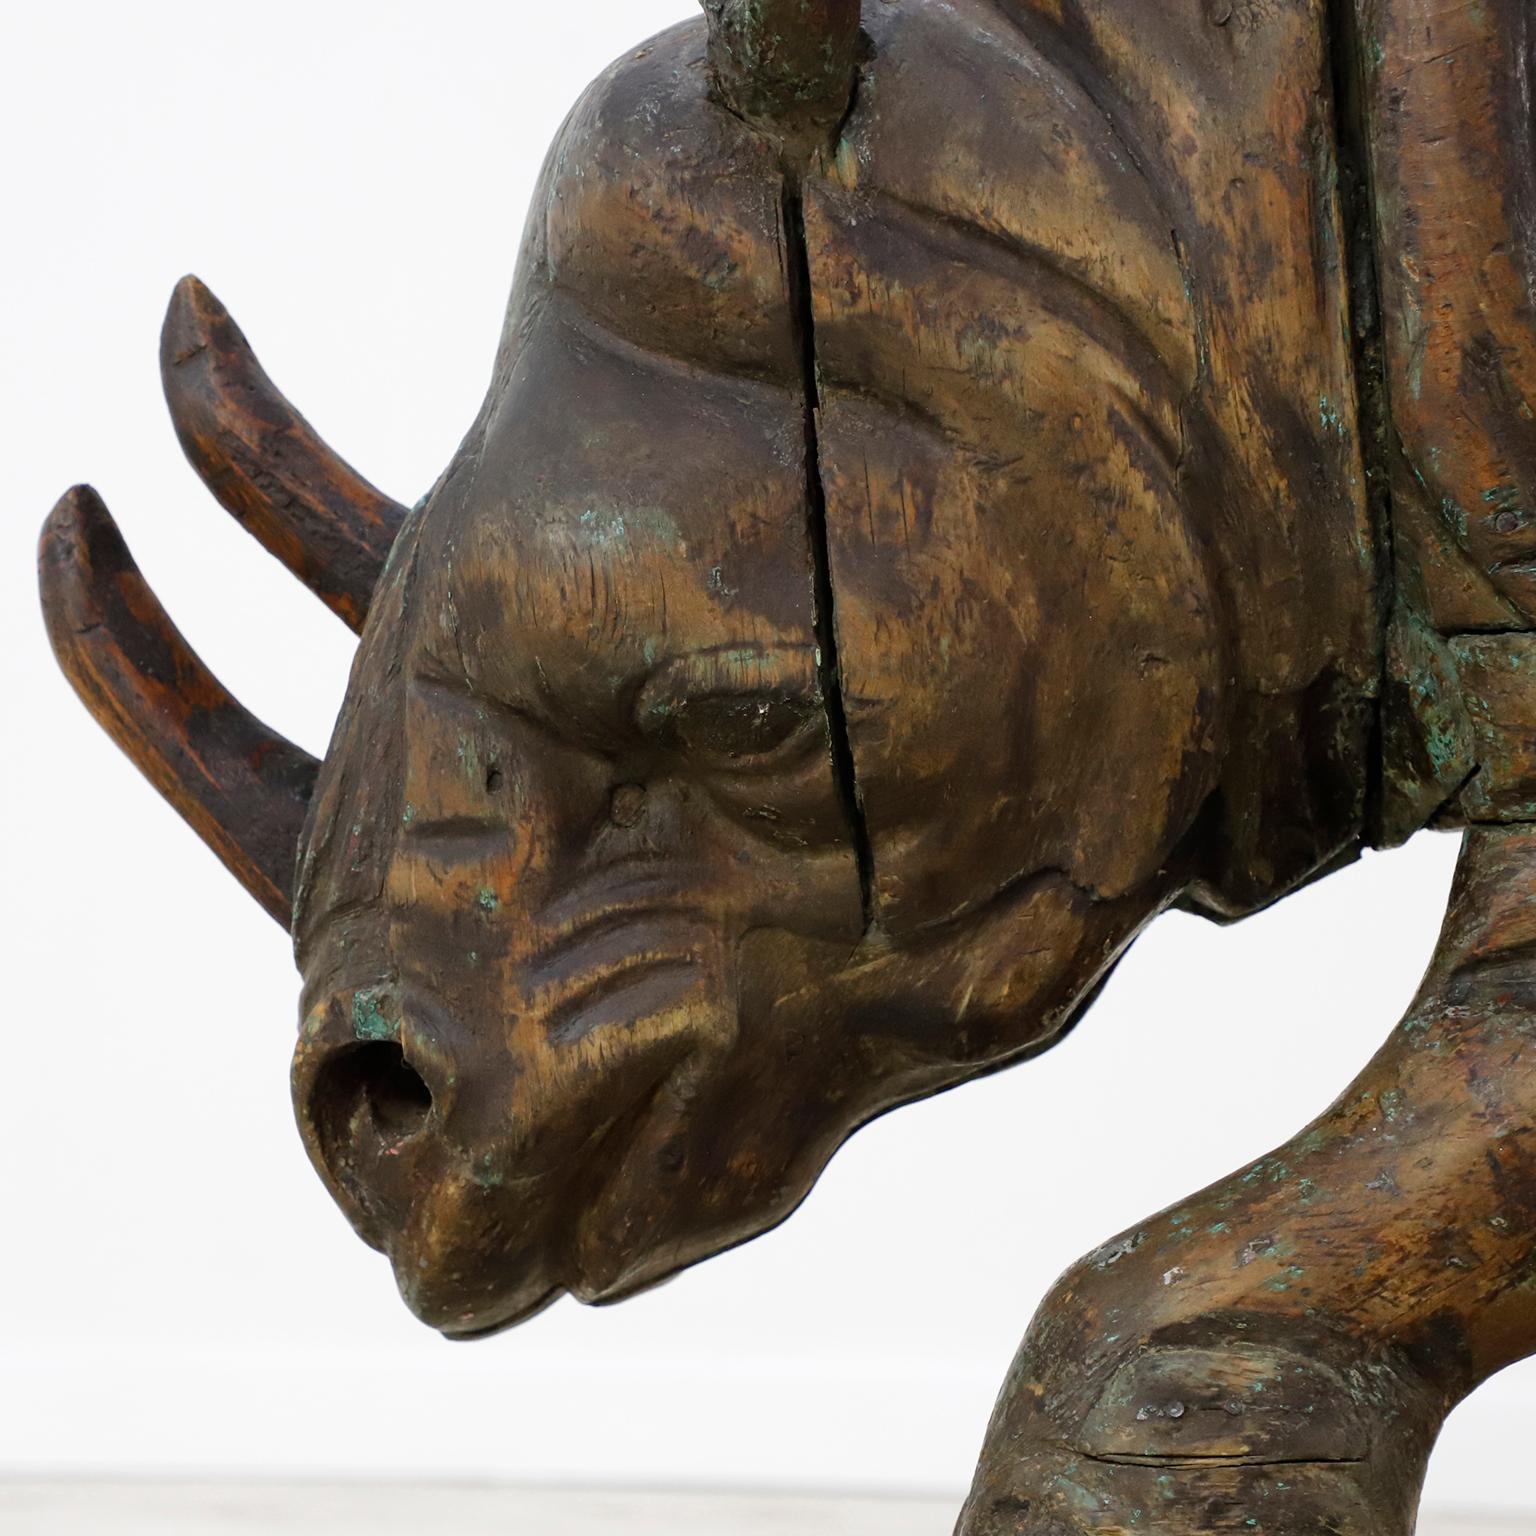 19th Century Mexican Carousel Rhino. Handmade in Carved wood beautiful patina.
